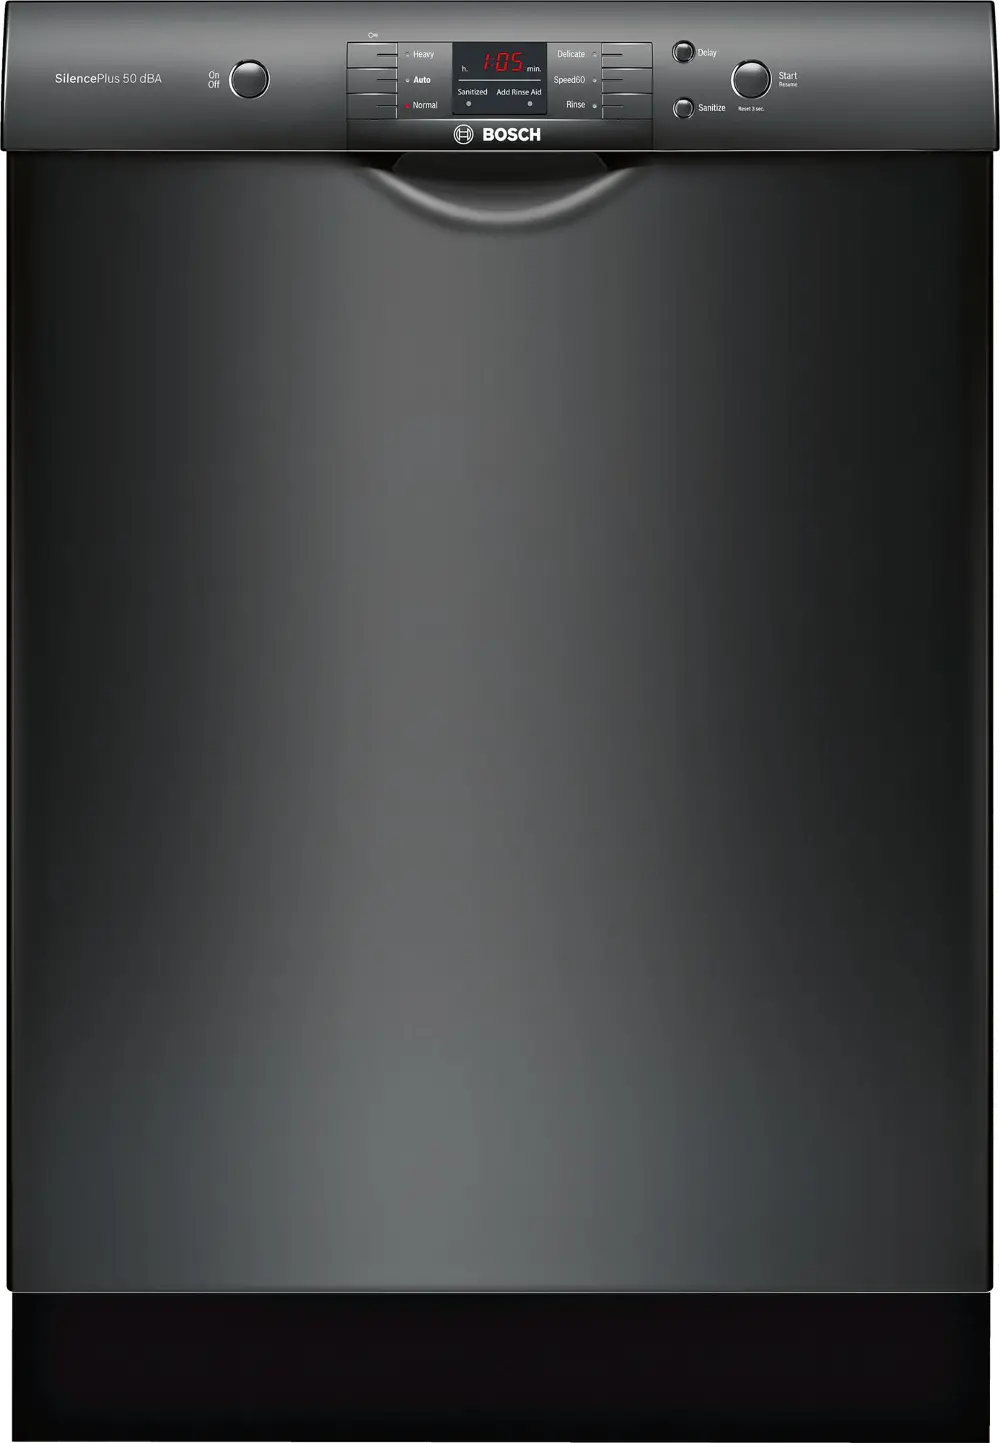 SHEM3AY56N Bosch 100 Series Dishwasher - Black-1